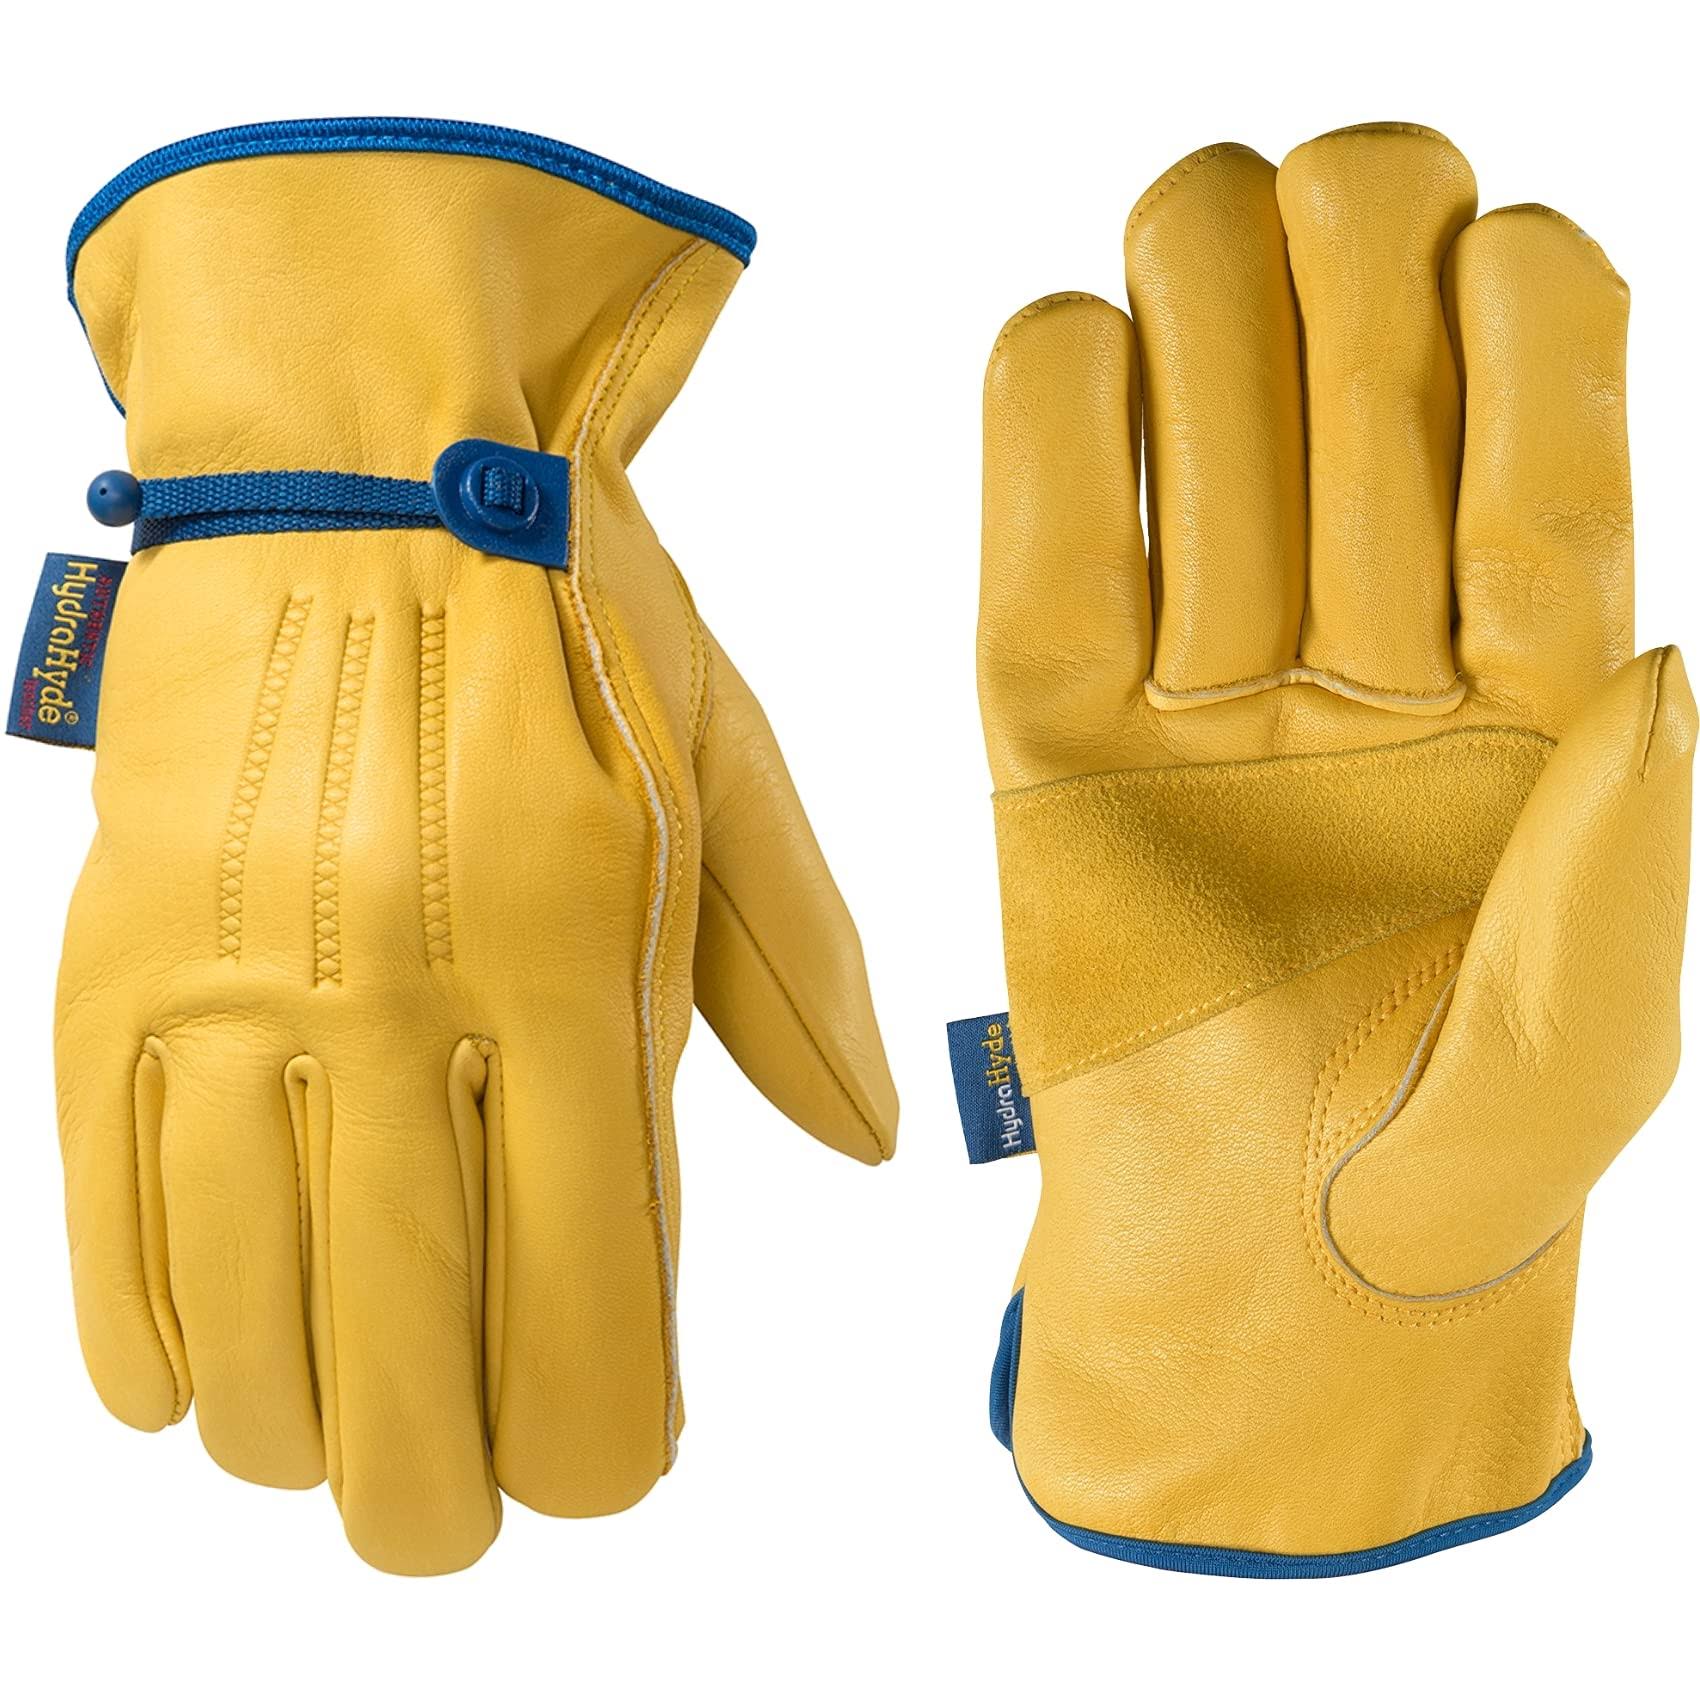 Wells Lamont 1168XL Work Gloves, Men's, L, 10 to 10-1/2 in L, Keystone Thumb, Slip-On Cuff, Cowhide Leather